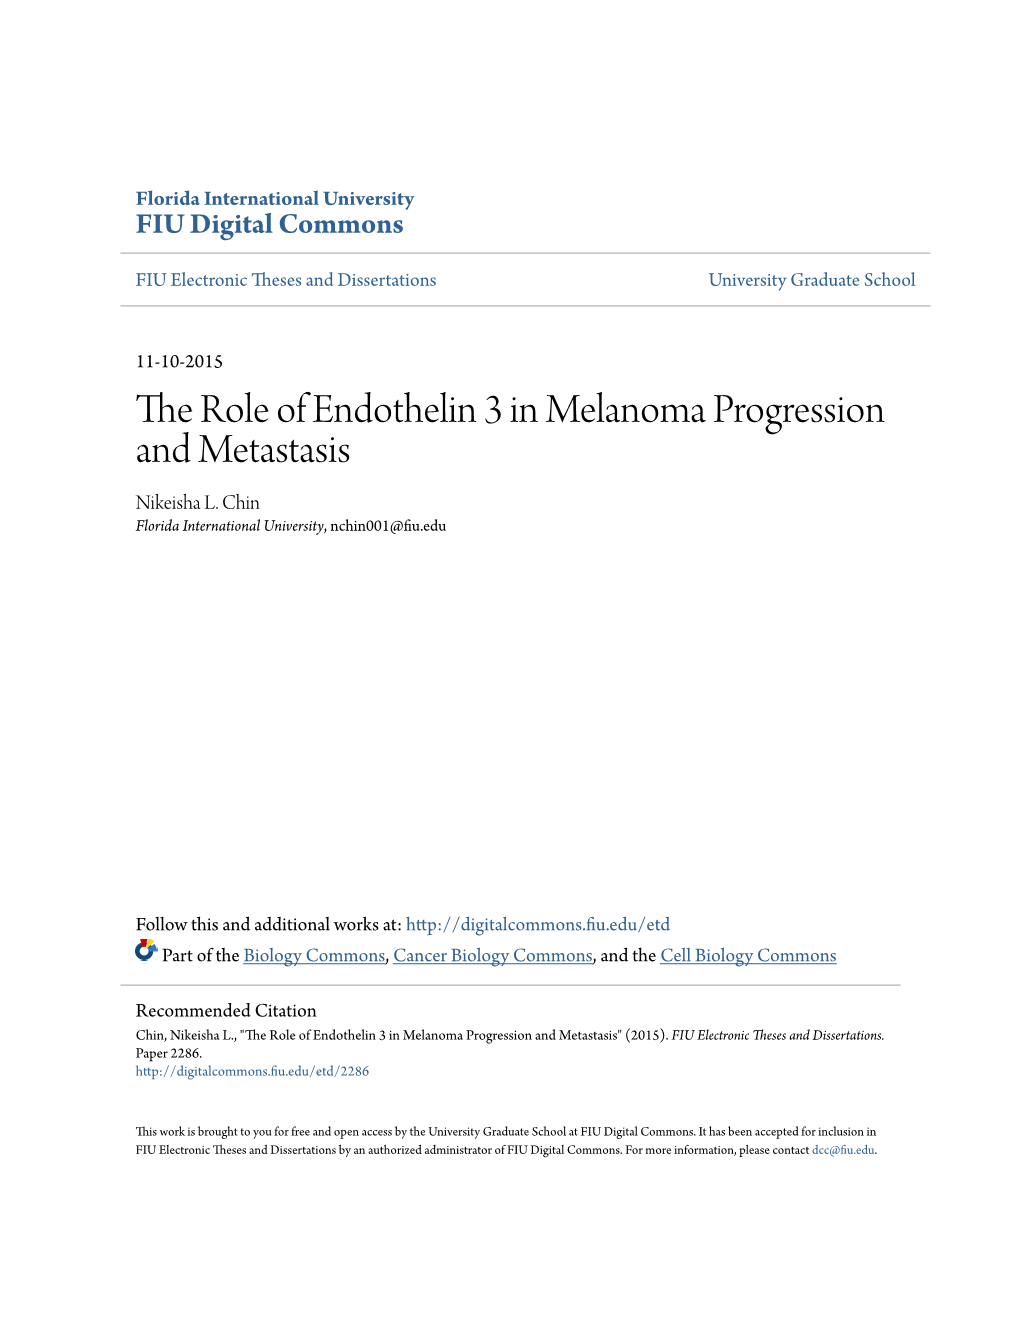 The Role of Endothelin 3 in Melanoma Progression and Metastasis Nikeisha L